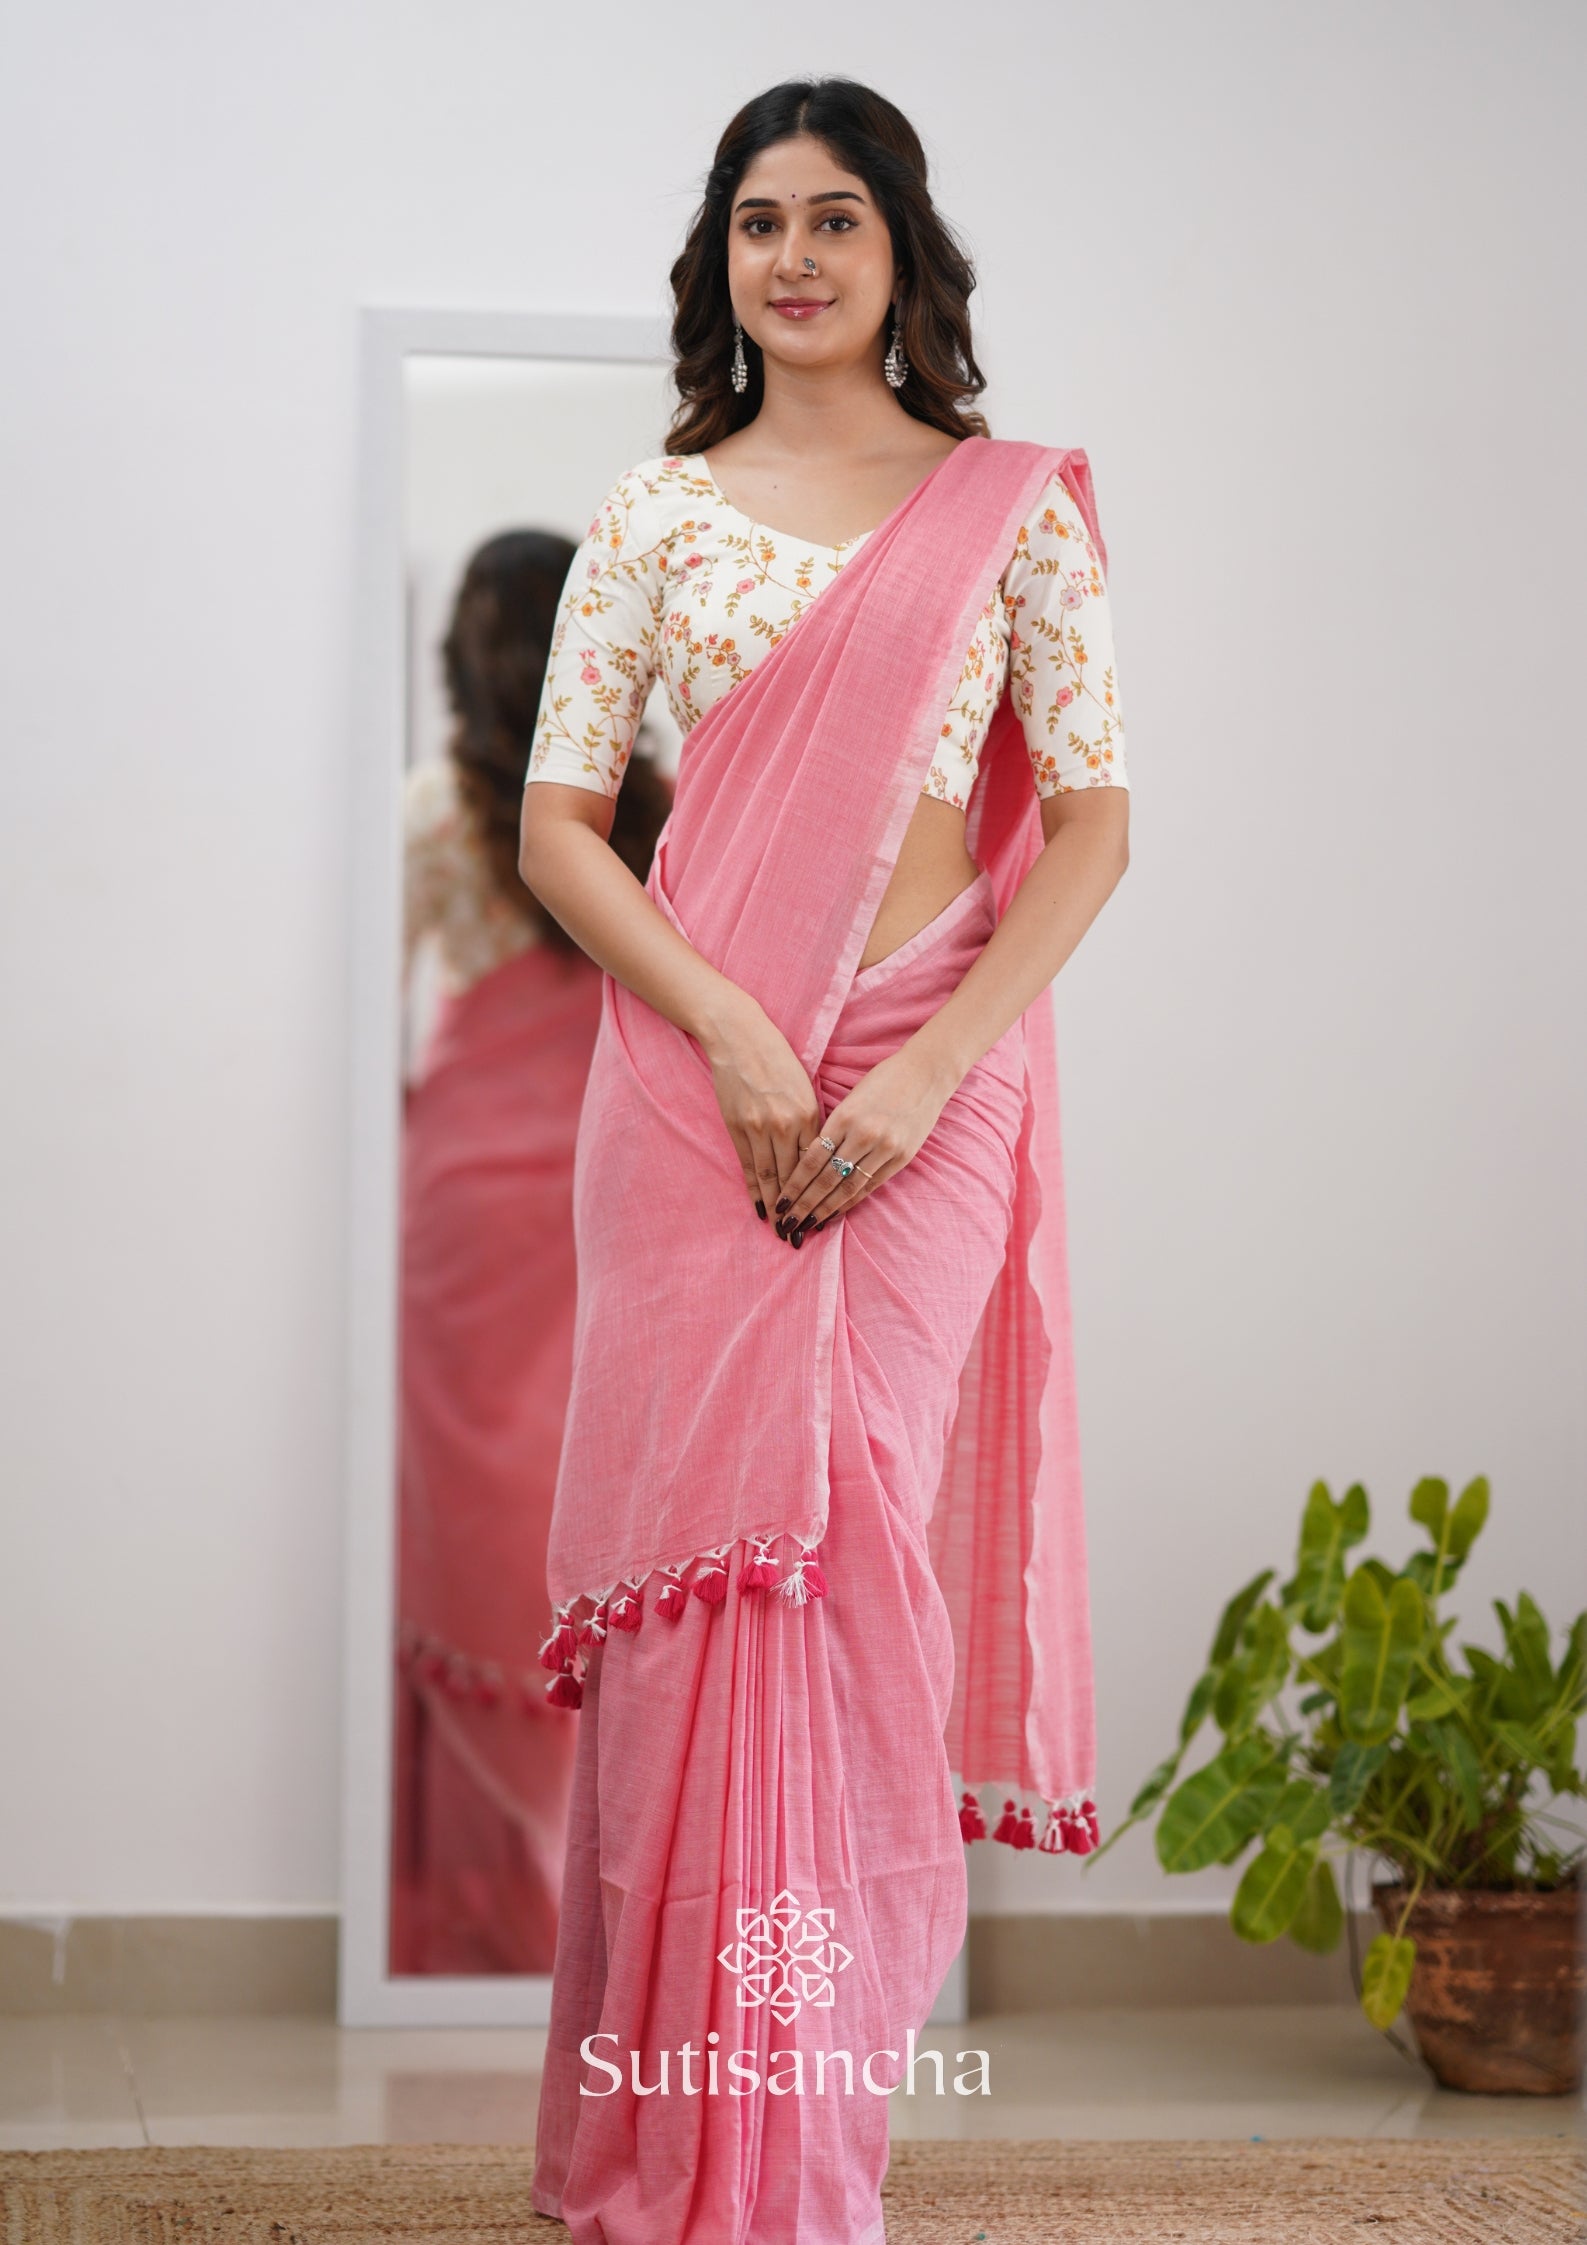 Sutisancha Peach Handloom Cotton Saree With Designer Blouse